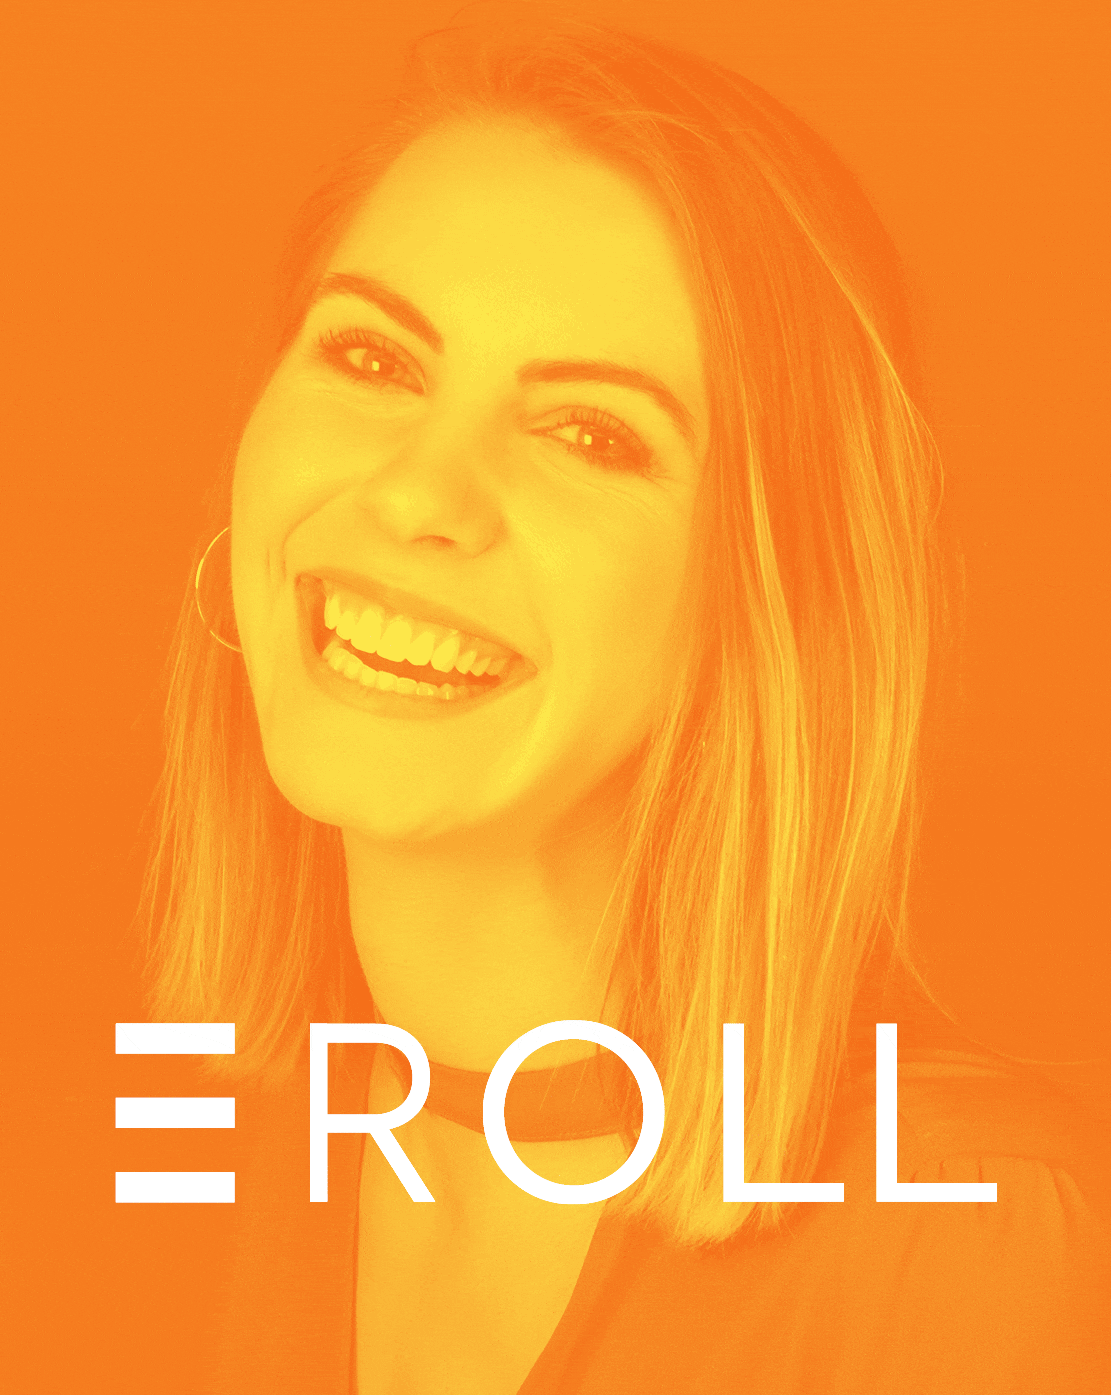 EROLL featuring Amanda Hermsen, EPIC Senior Project Manager